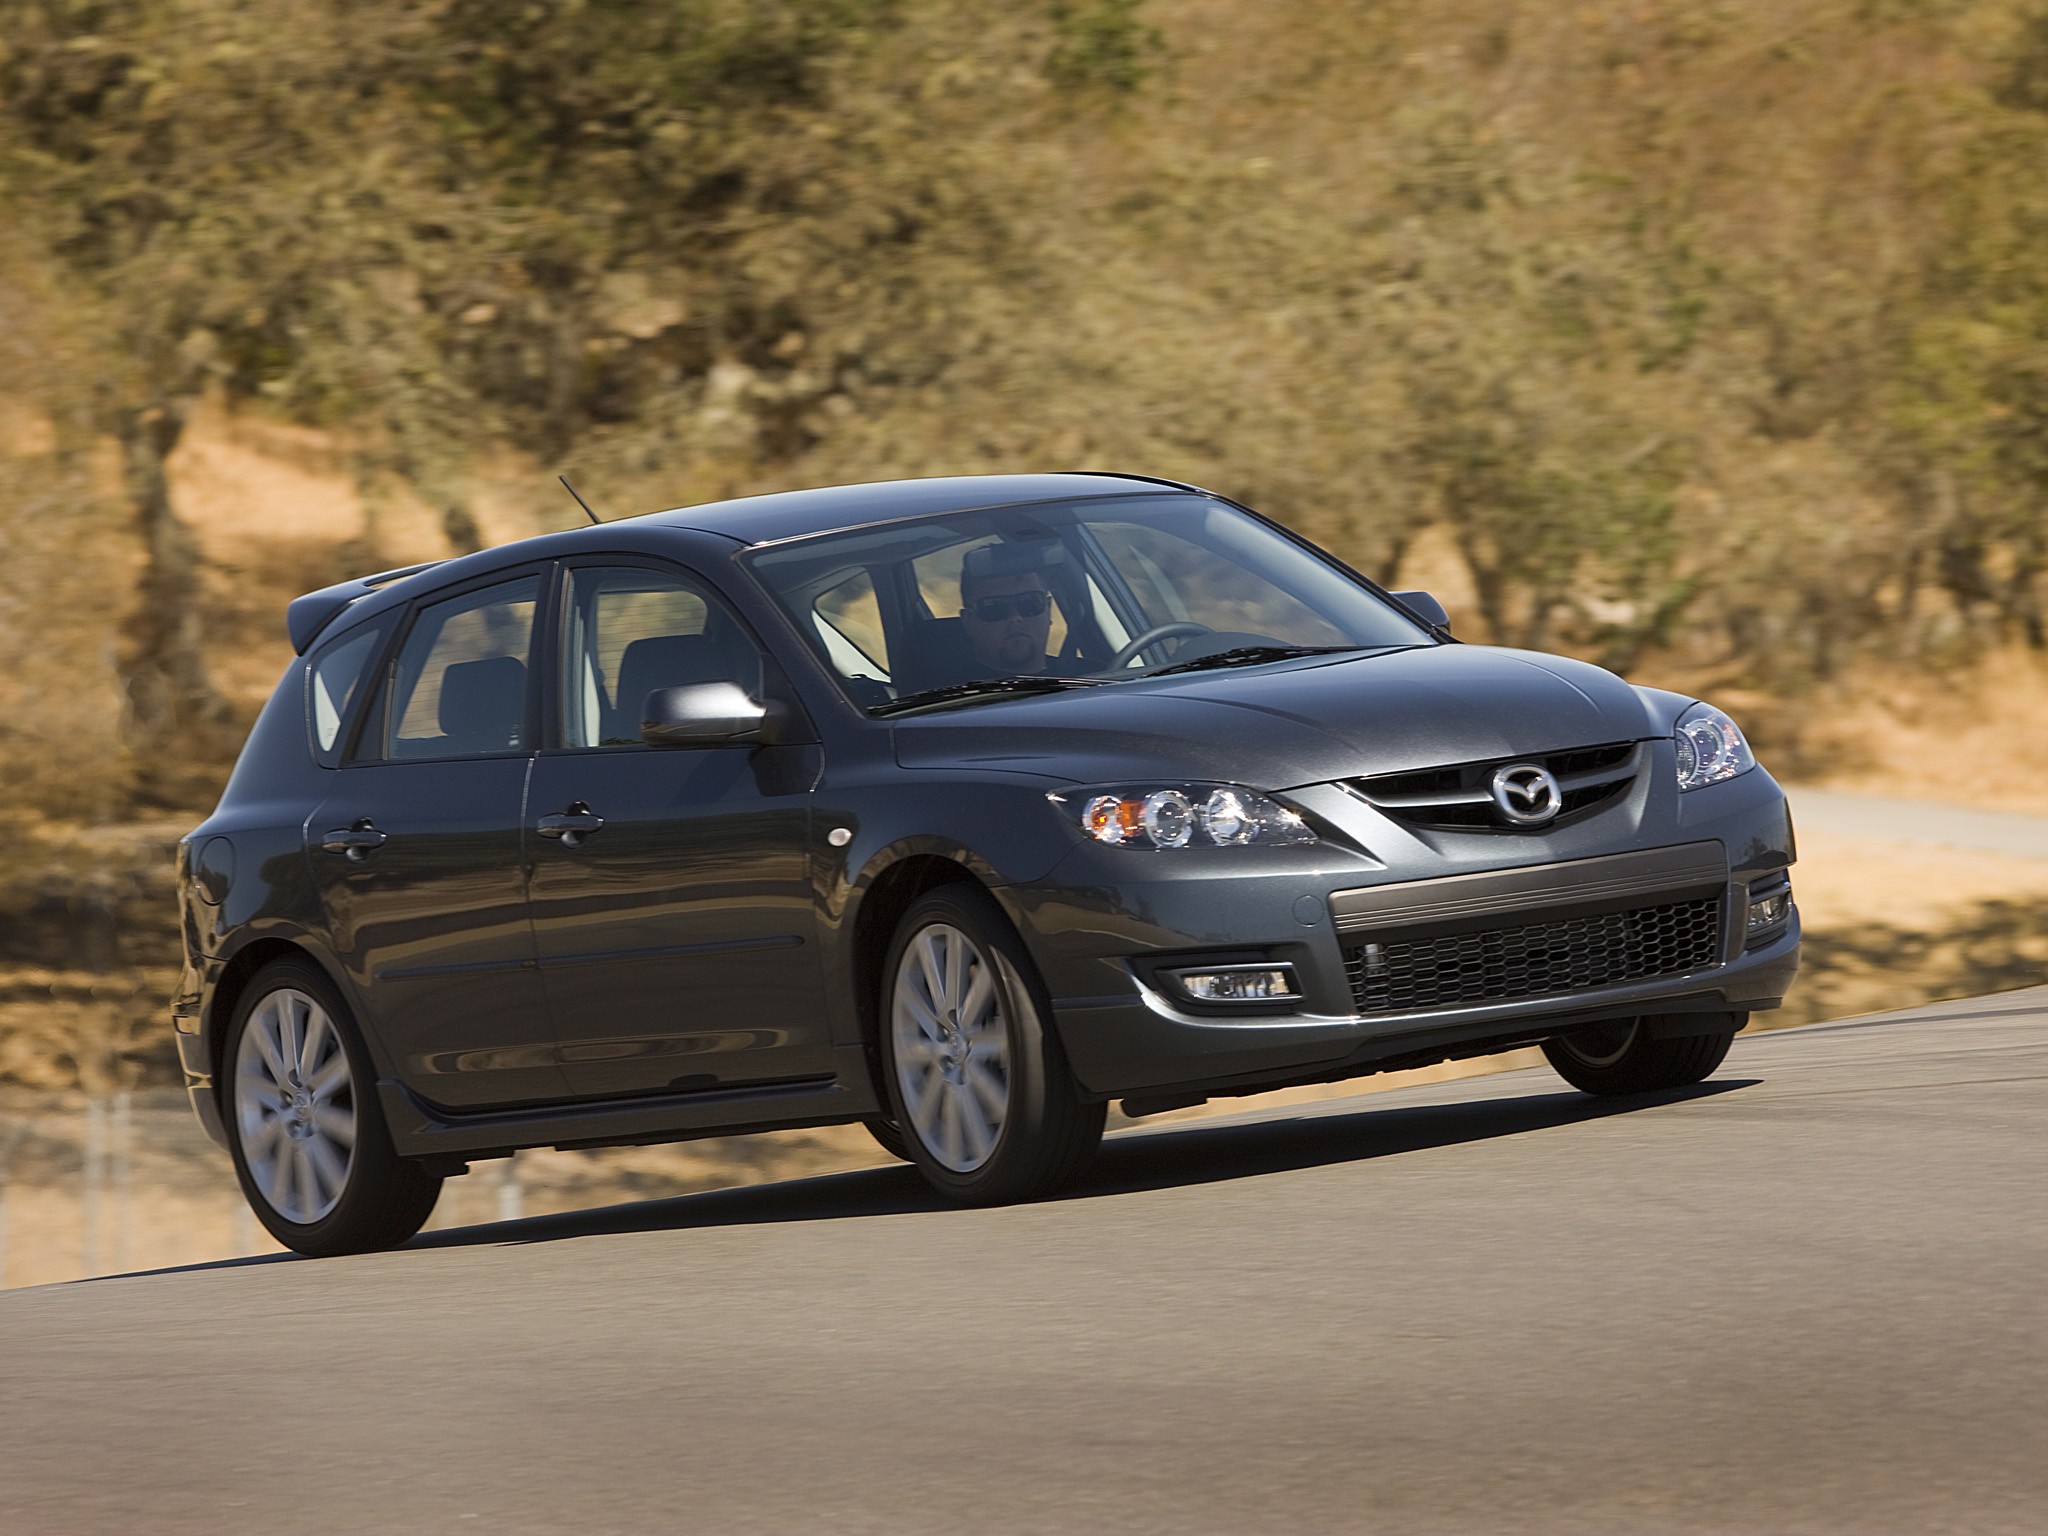 Mazdaspeed 3 performance upgrades